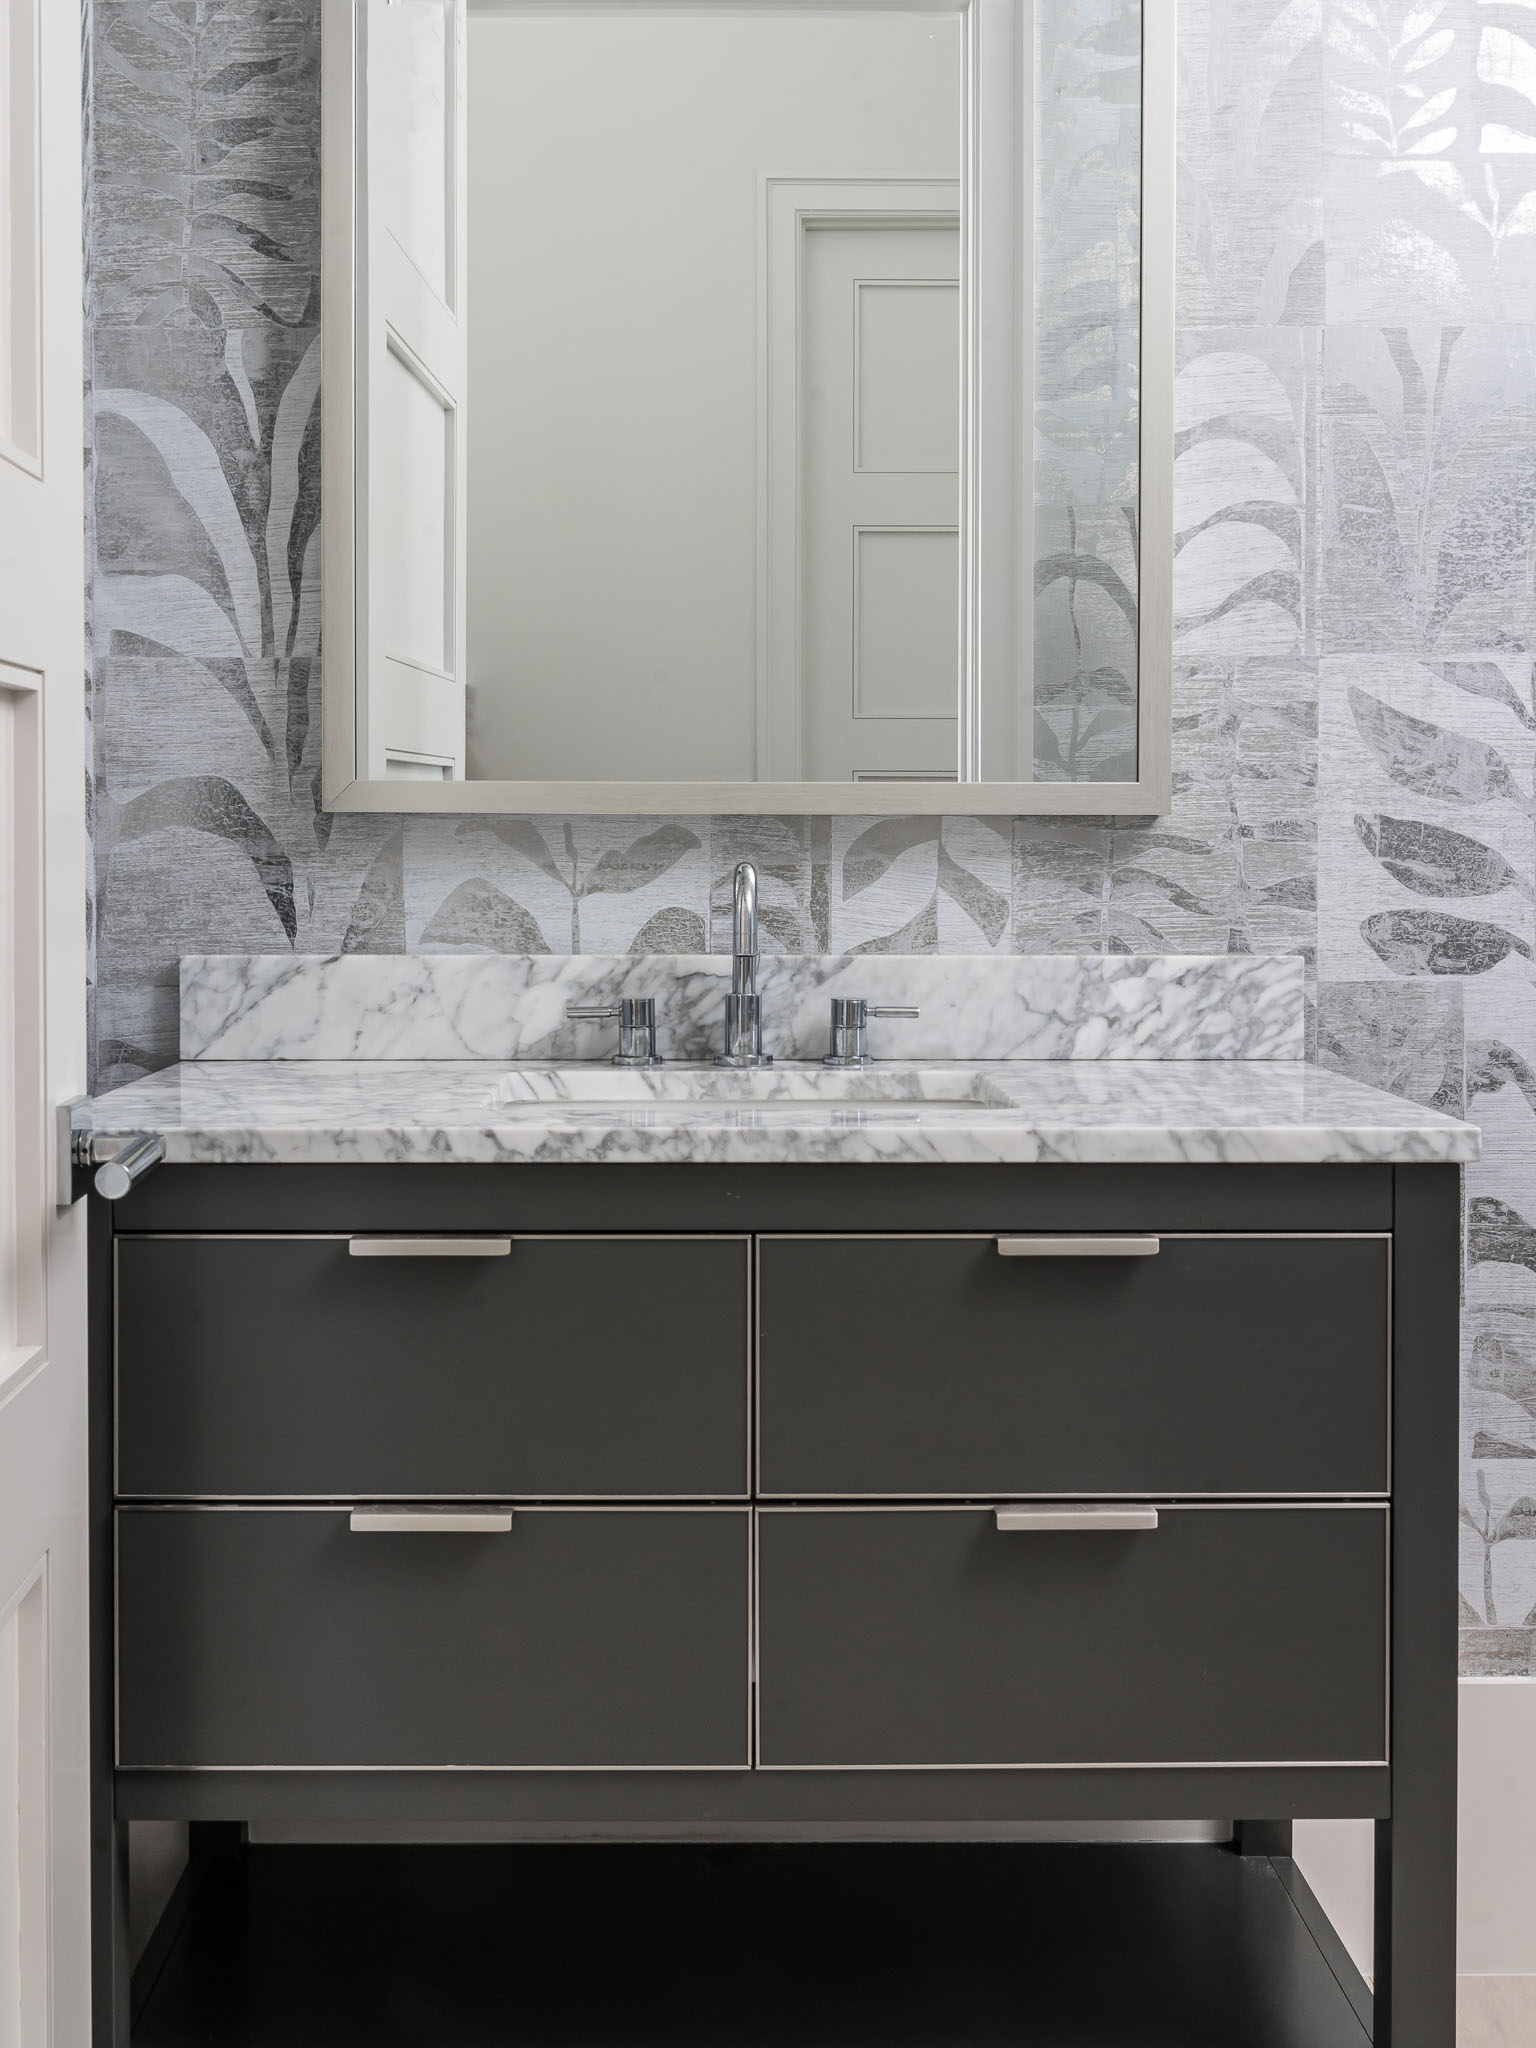 A coastal contemporary powder bathroom design with a neutral palette, designed by Florida interior designer Brooke Meyer of Gulfshore Interior Design